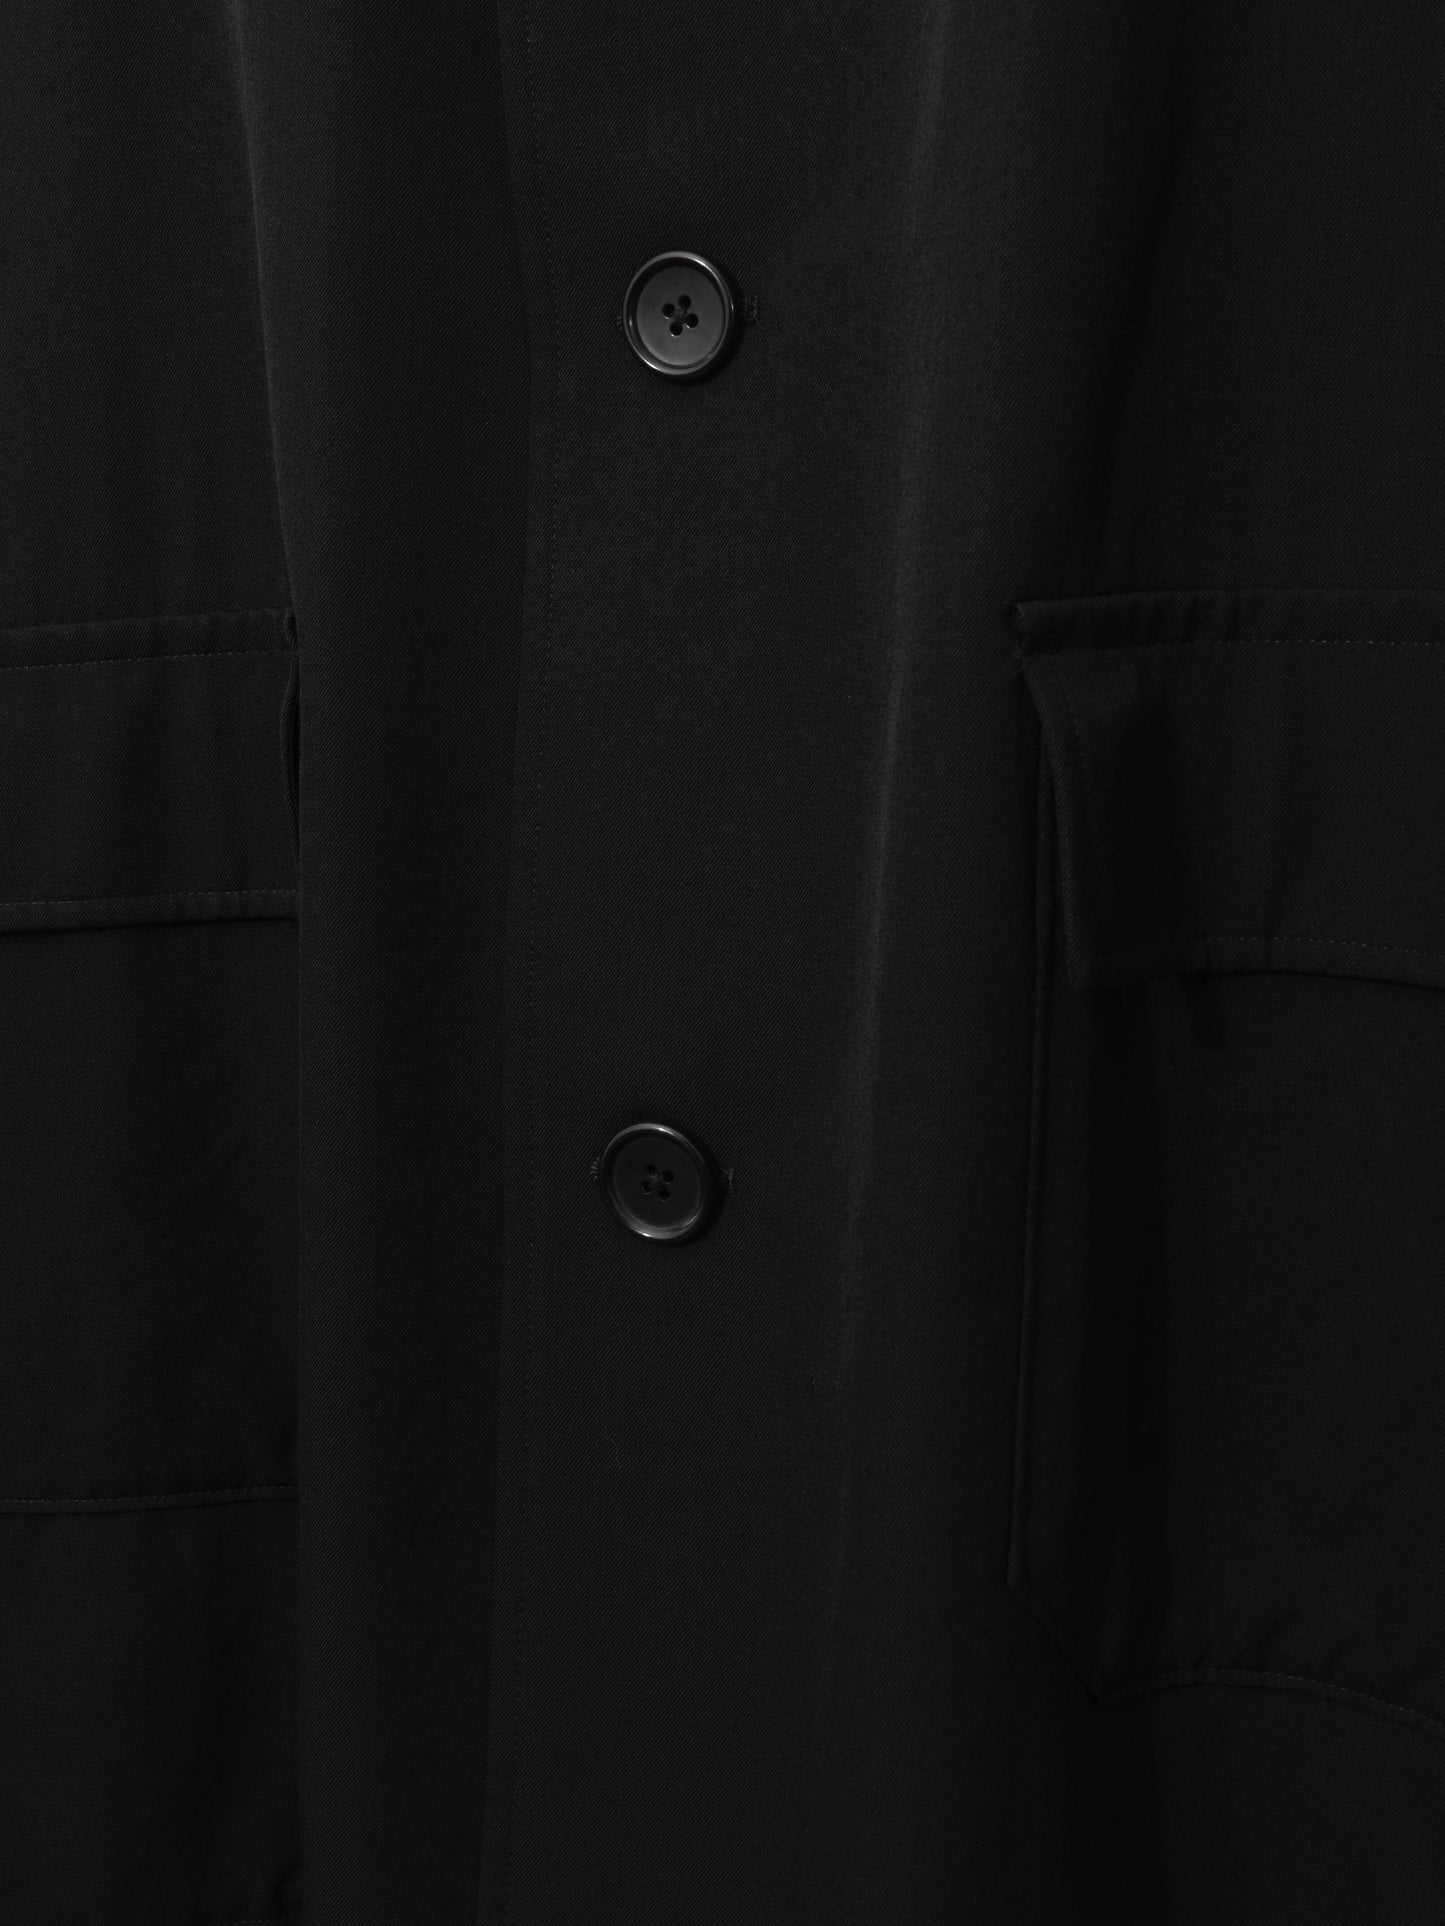 convertible collar coat black ∙ wool ∙ large